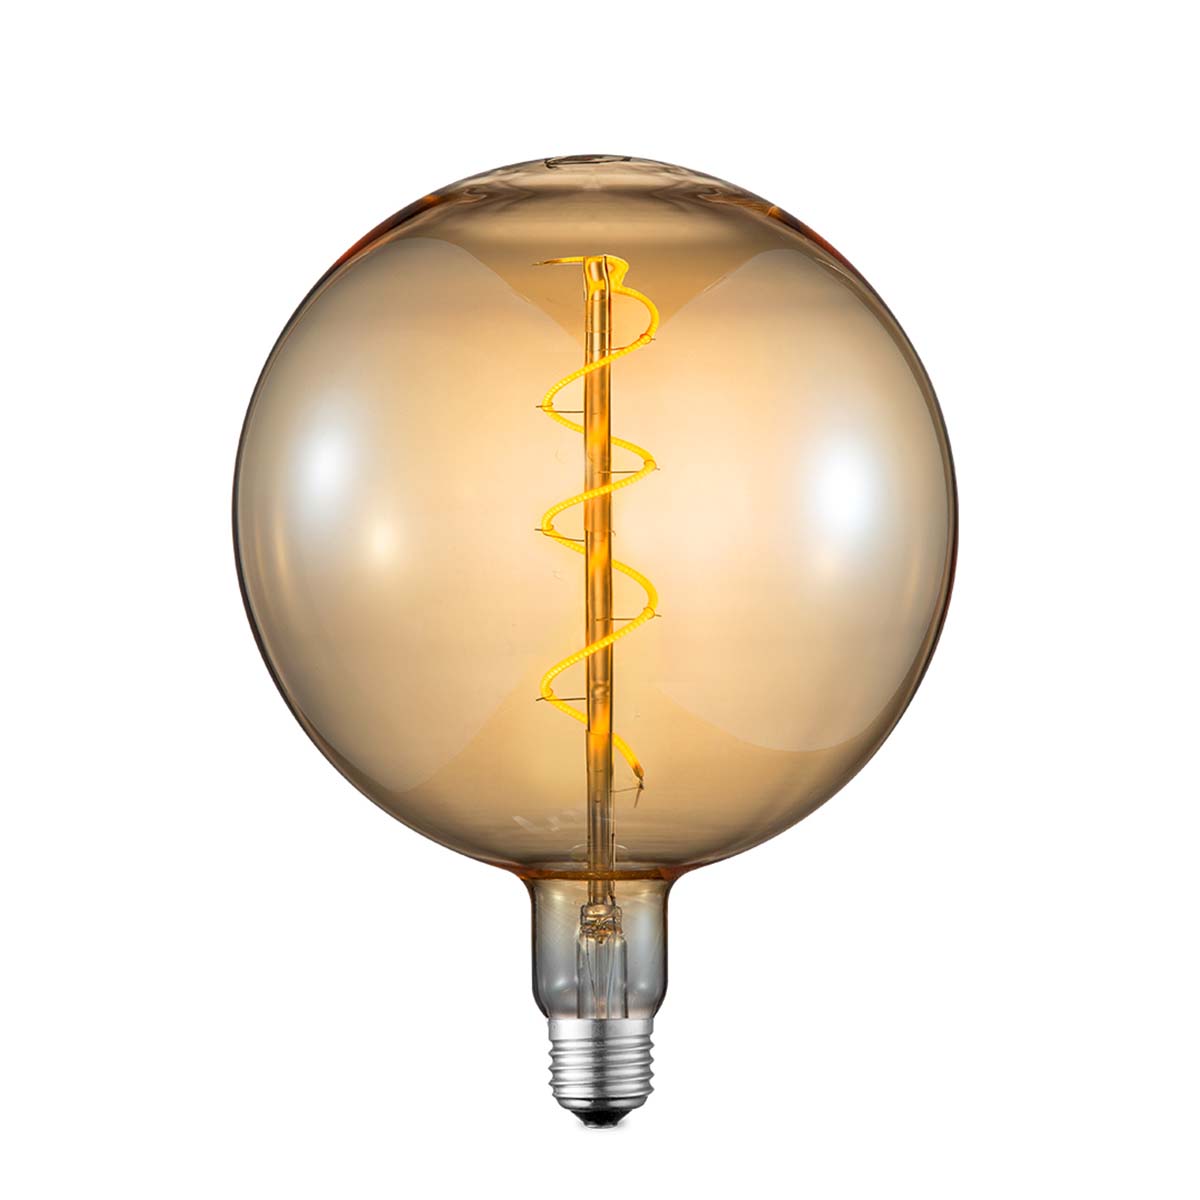 Tangla lighting - TLB-8011-04AM - LED Light Bulb Single Spiral filament - G150 4W amber- large - dimmable - E27